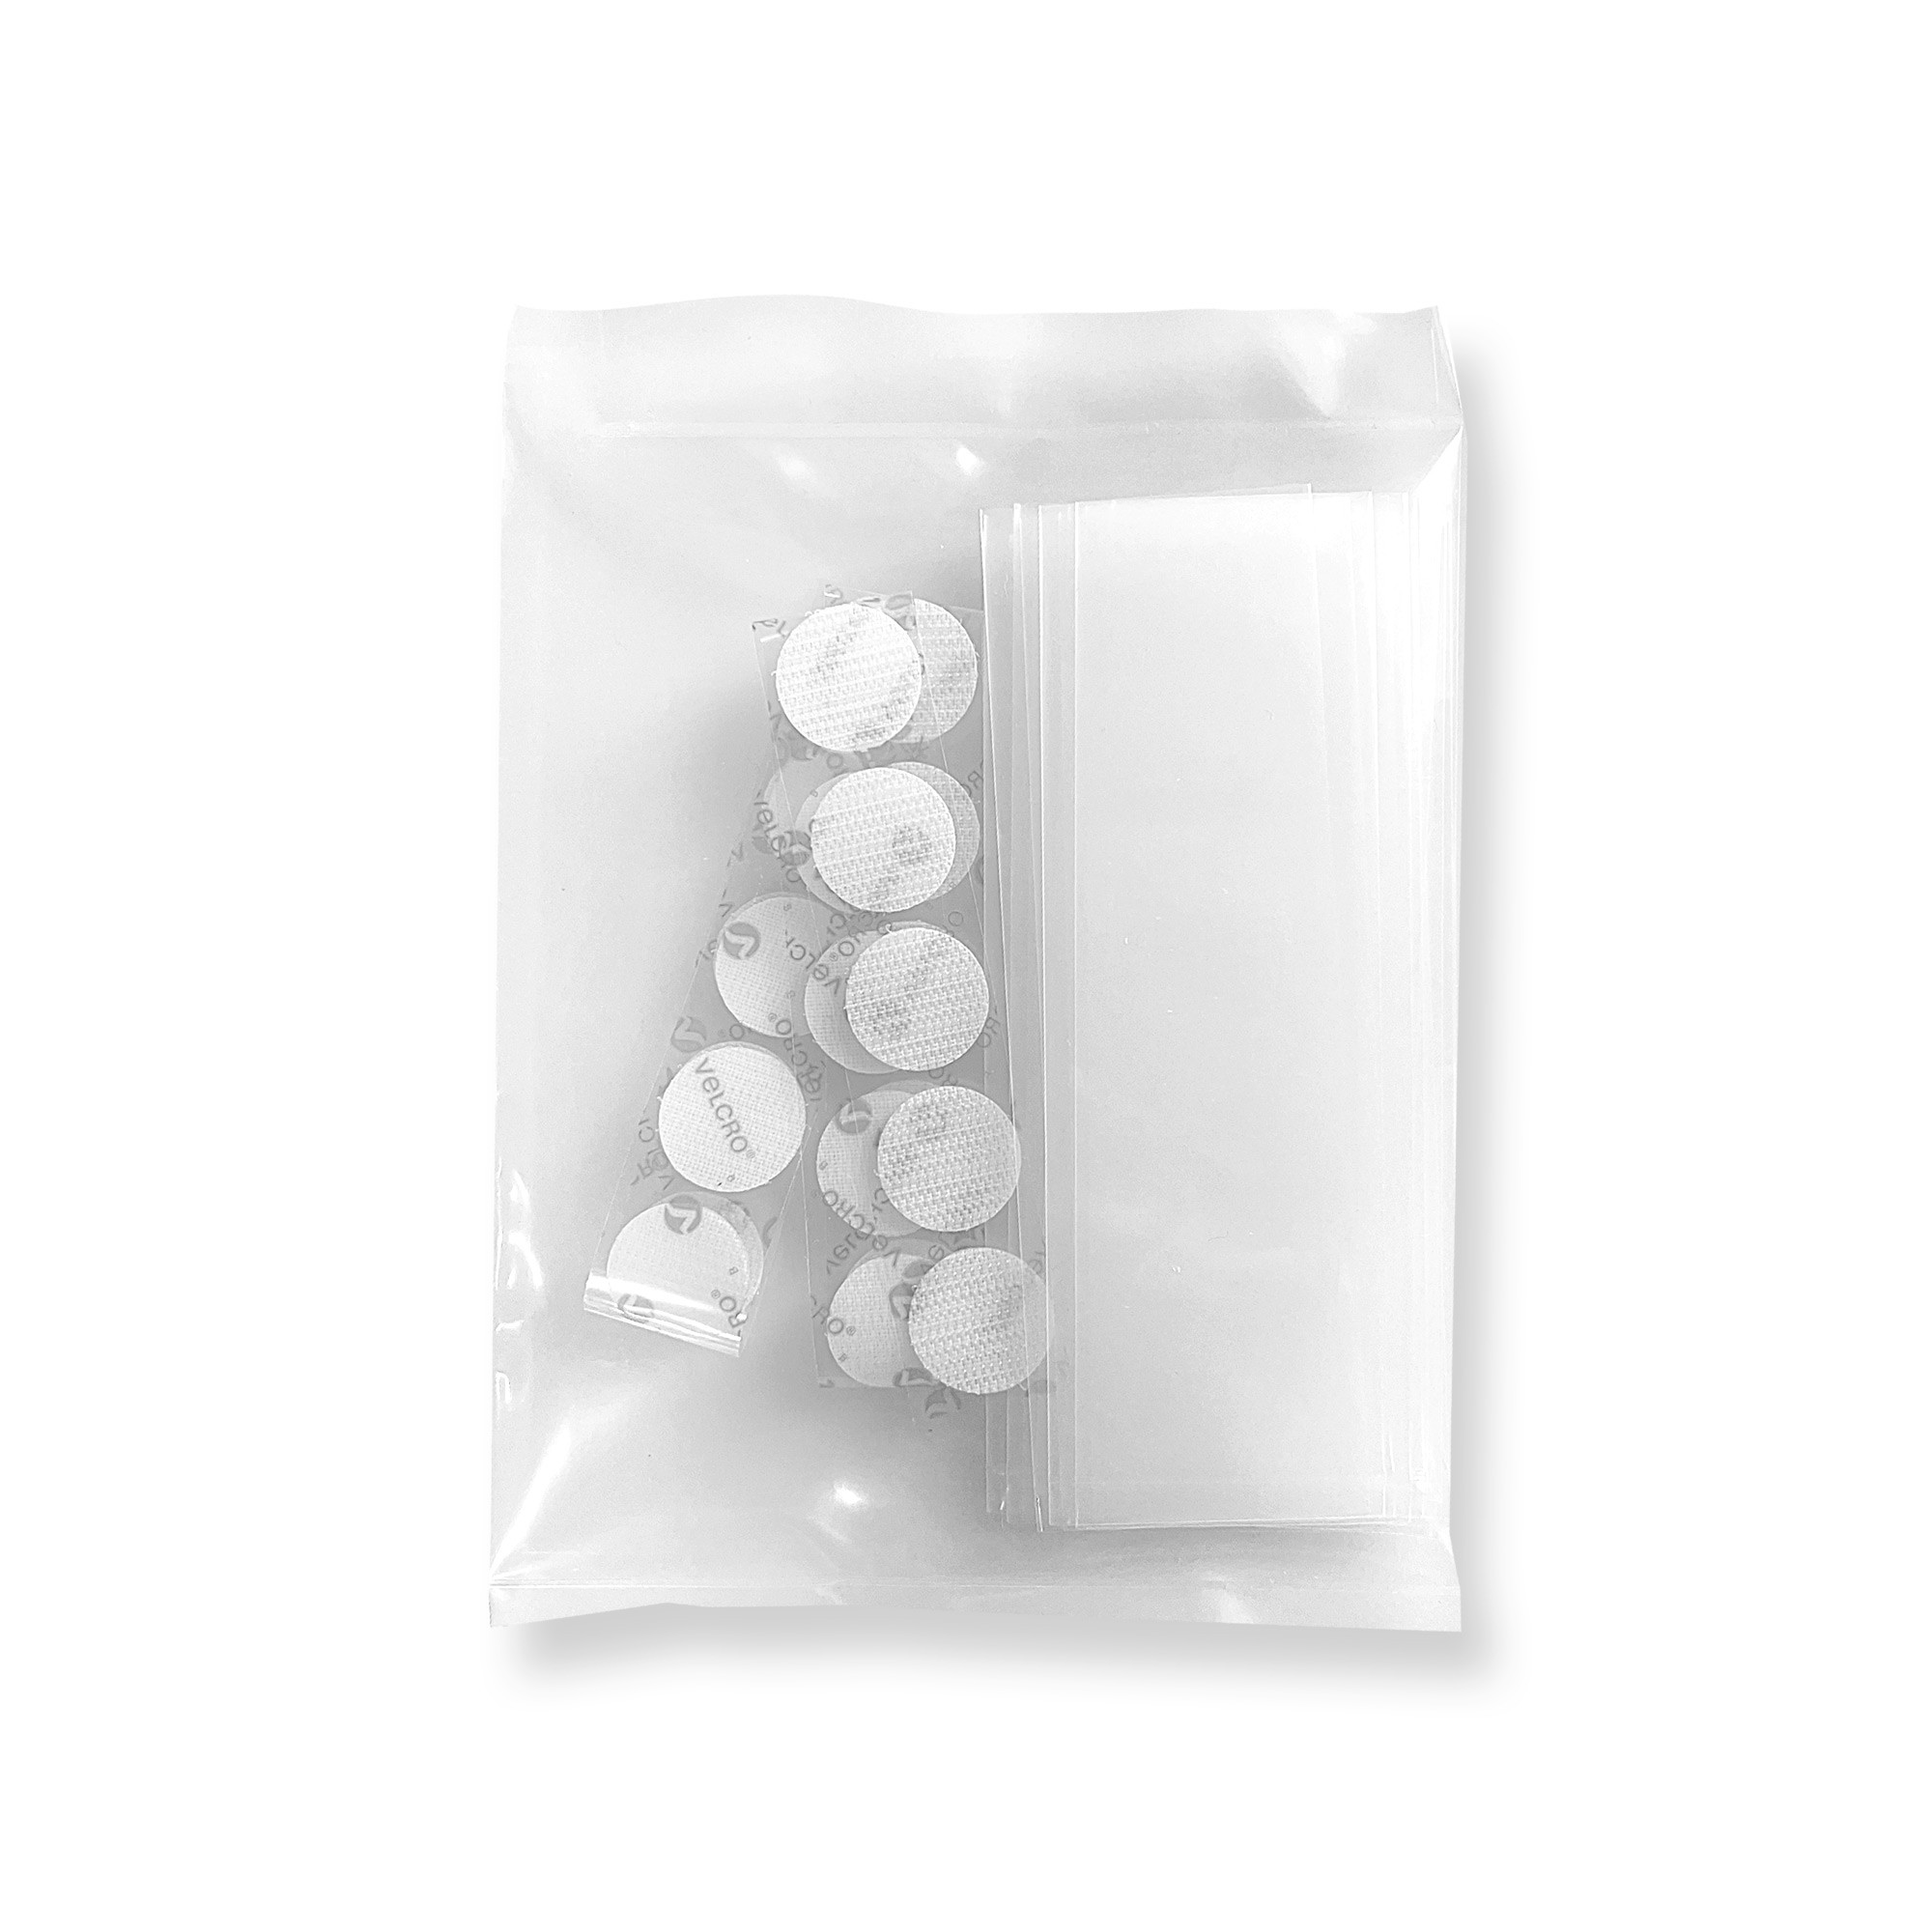 Nurse's Office 16-Unit Emergency supplies Polybag/Velcro Refill Kit